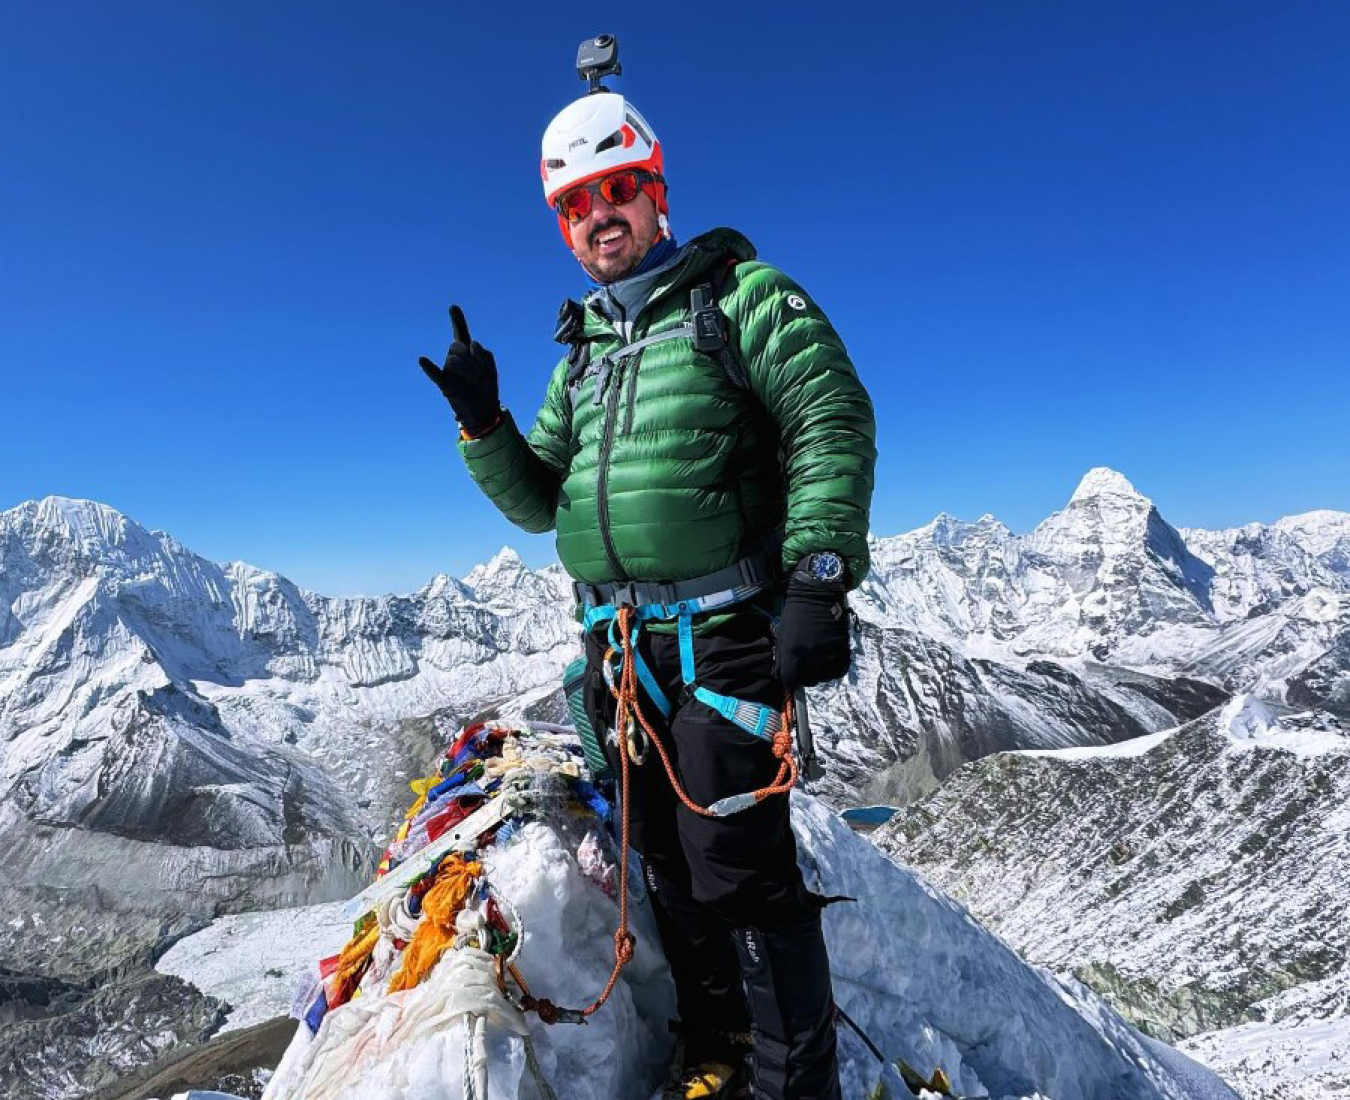 AC climber Wayne Ryan on the summit of Island Peak, Nepal. Stunning mountain vistas and bright blue sky behind.